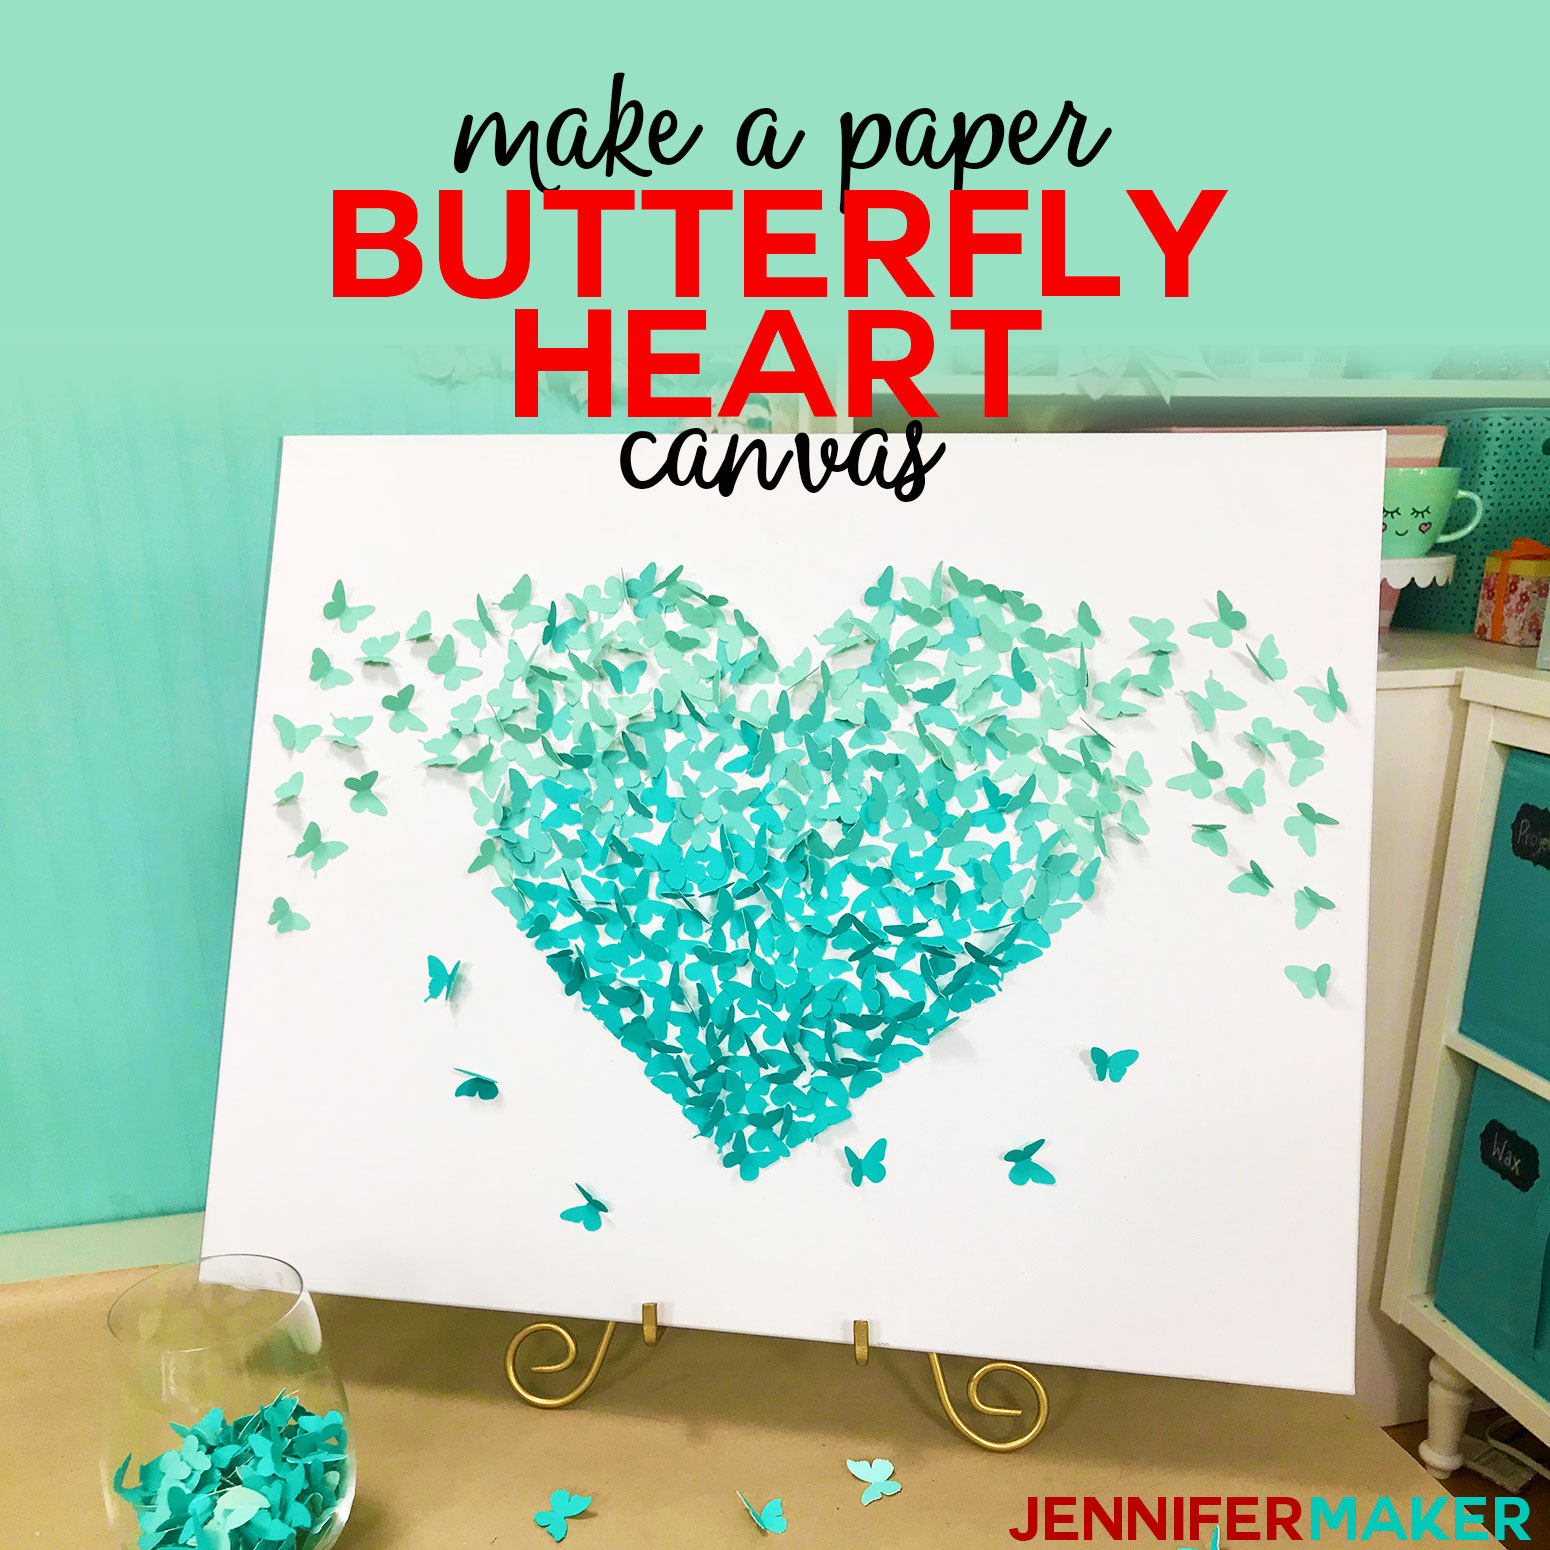 Make a Paper Butterfly Heart Canvas Wall Art with Free SVG Cut Files #cricut #cricutmade #svgcutfile #diy #homedecor